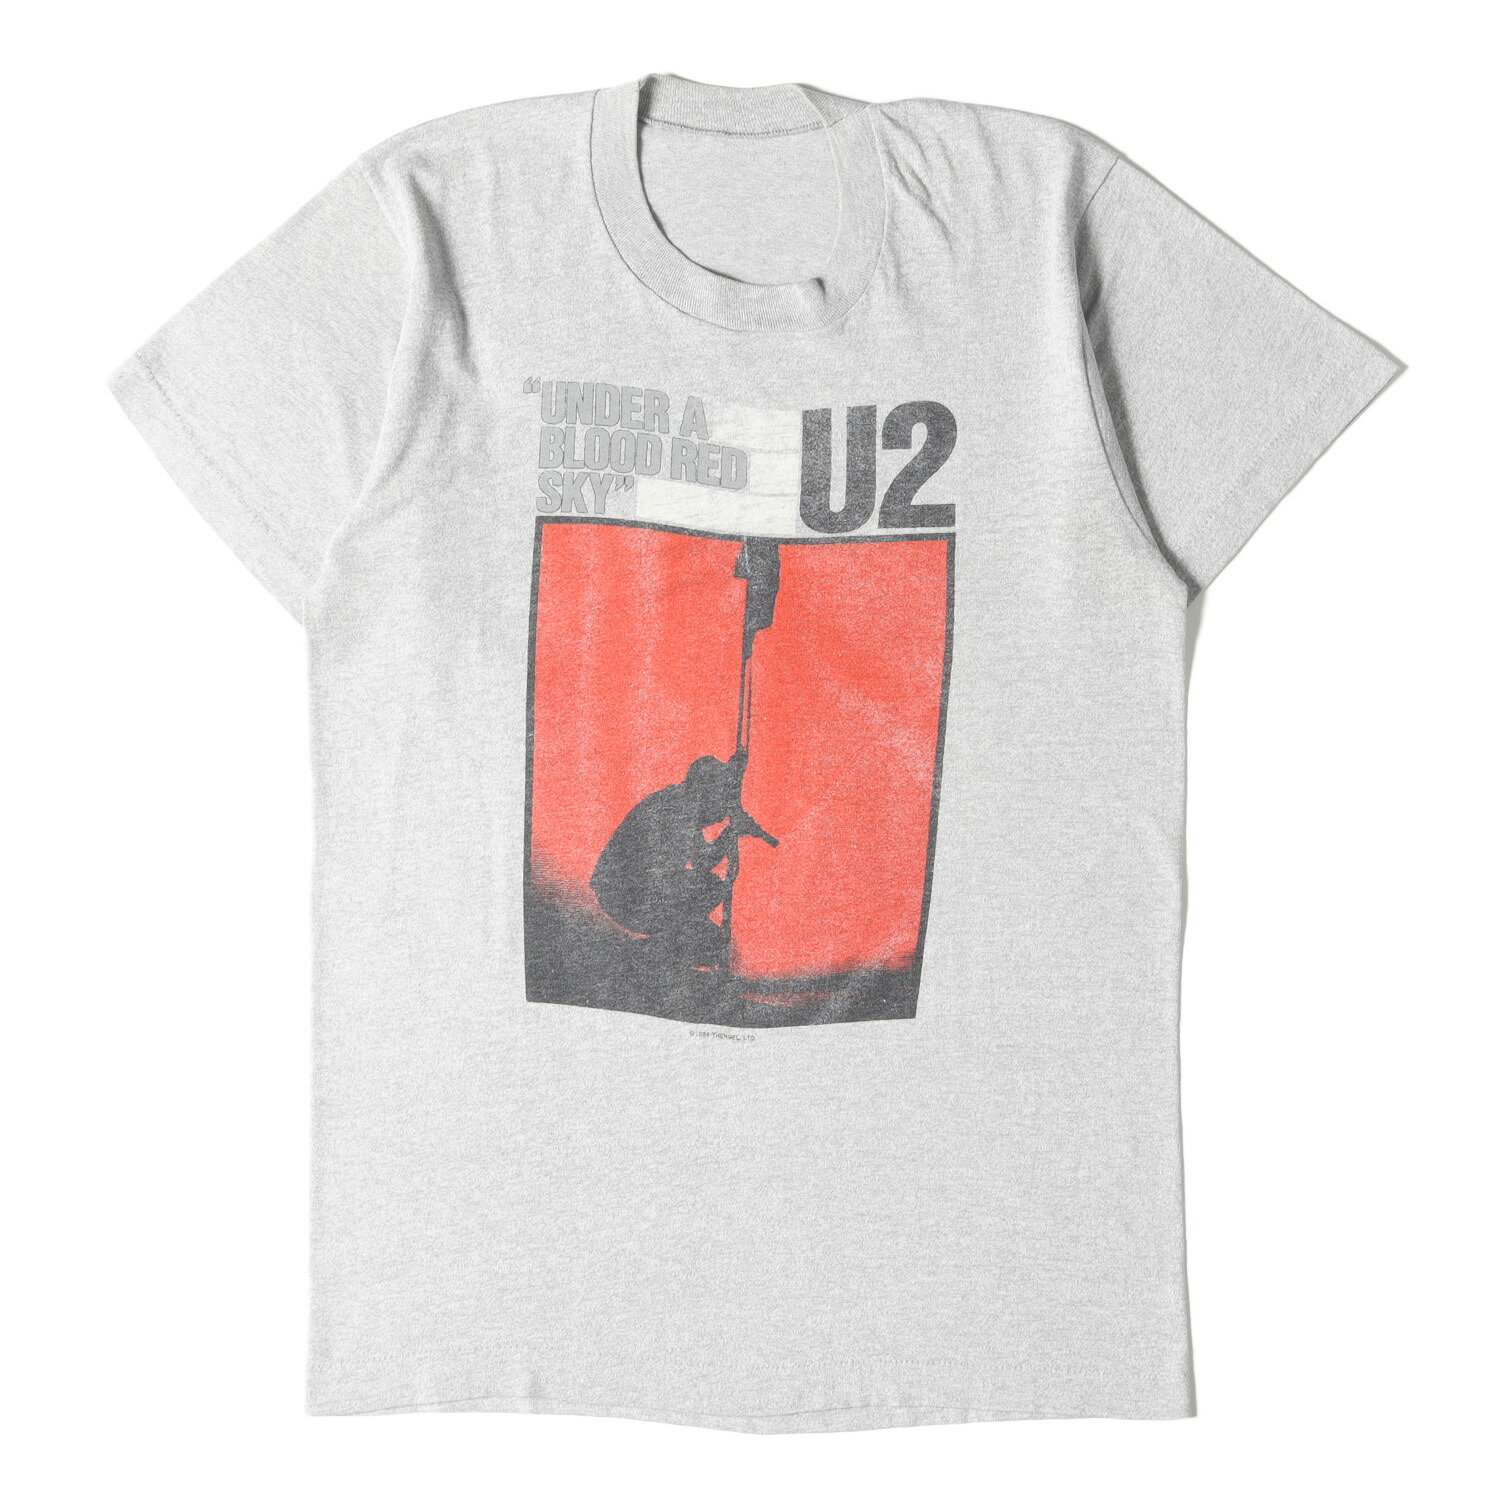 Vintage Rock Item ヴィンテージ ロックアイテム 80s U2 Under a Blood Red Sky クルーネック Tシャツ ヘザーグレー 詳細参照(L位) ブラッド・レッド・スカイ トップス カットソー 半袖 古着 バンド 【メンズ】【中古】【K4102】